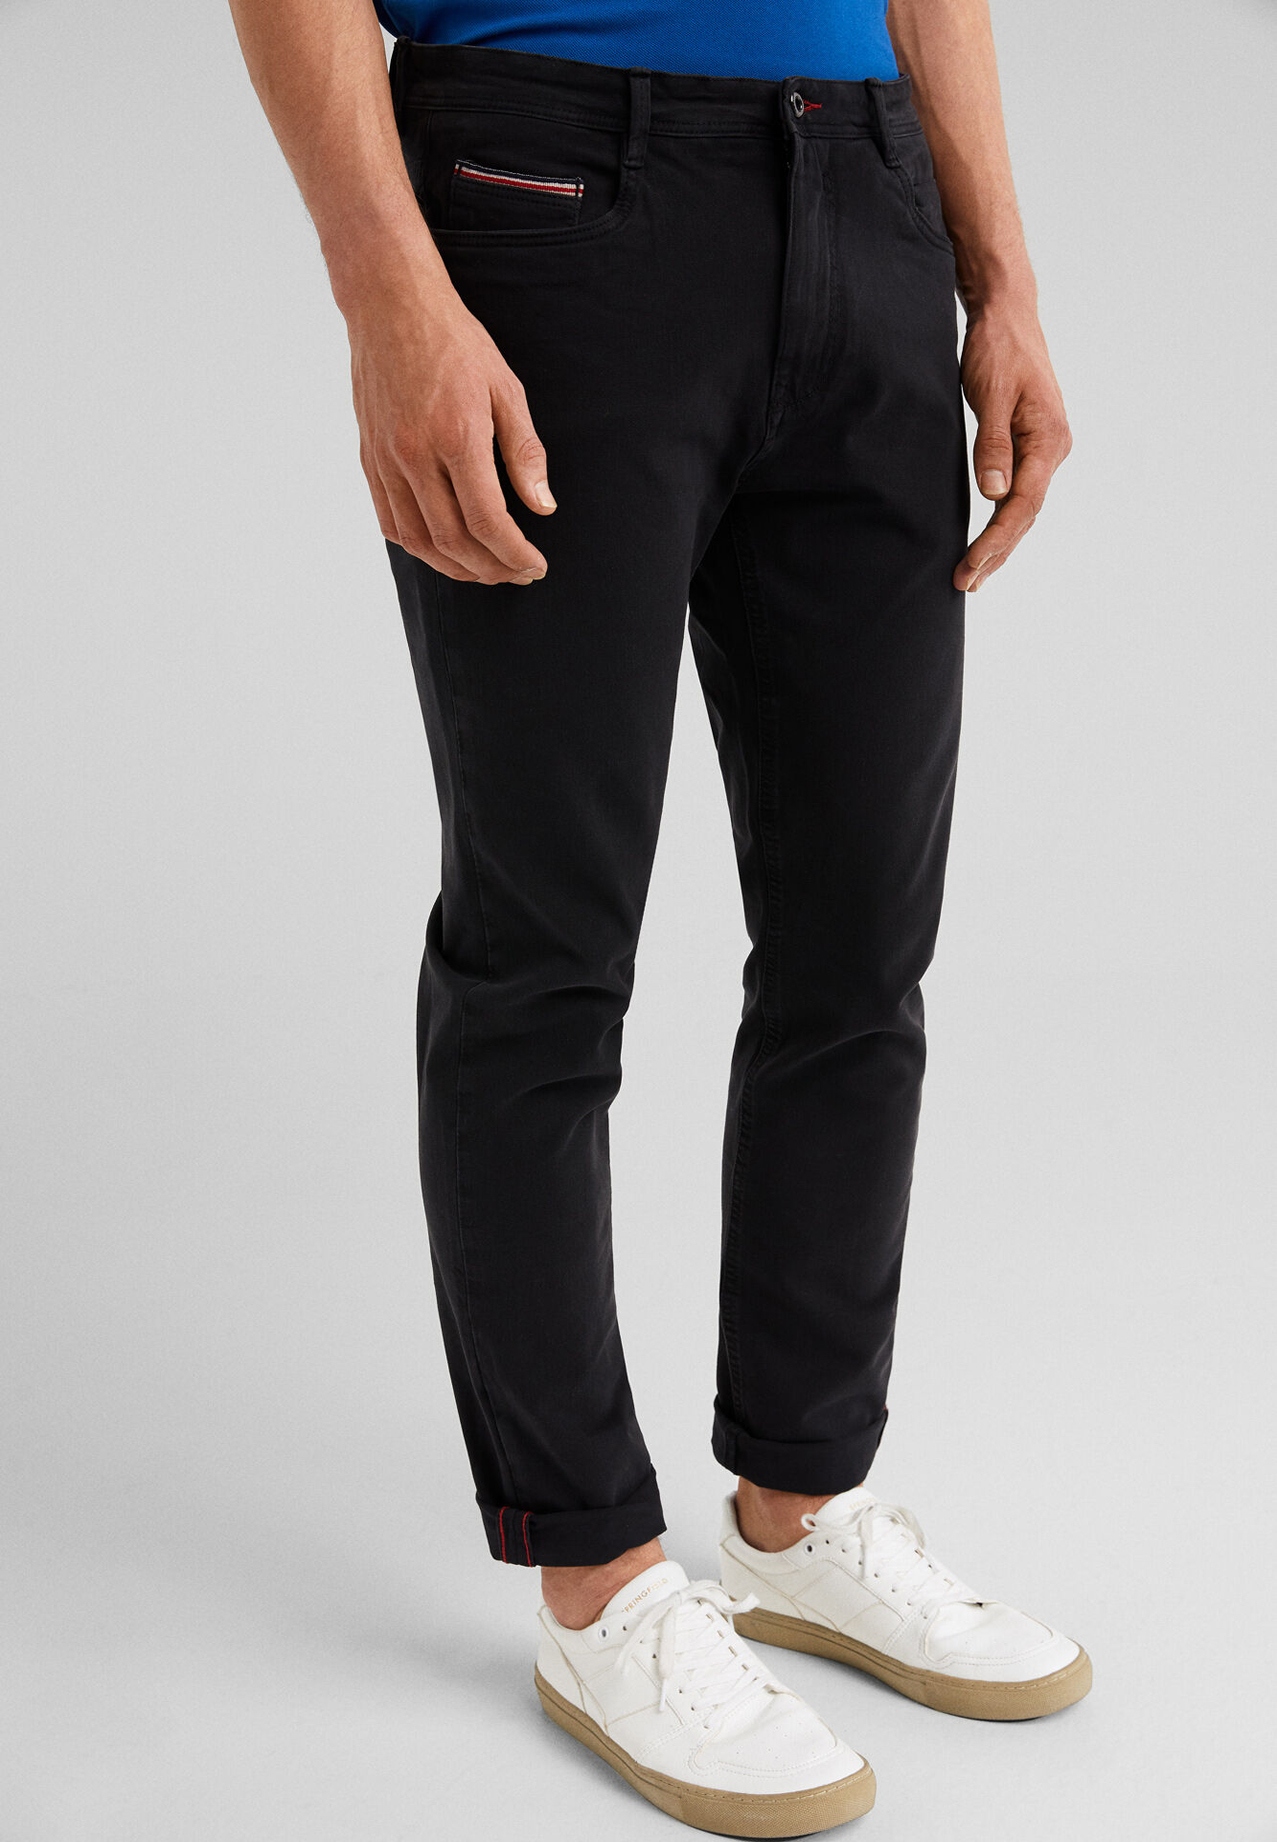 Buy Springfield Casual Trousers Cotton, Slim Fit, Black Online Dubai, UAE, OurShopee.com